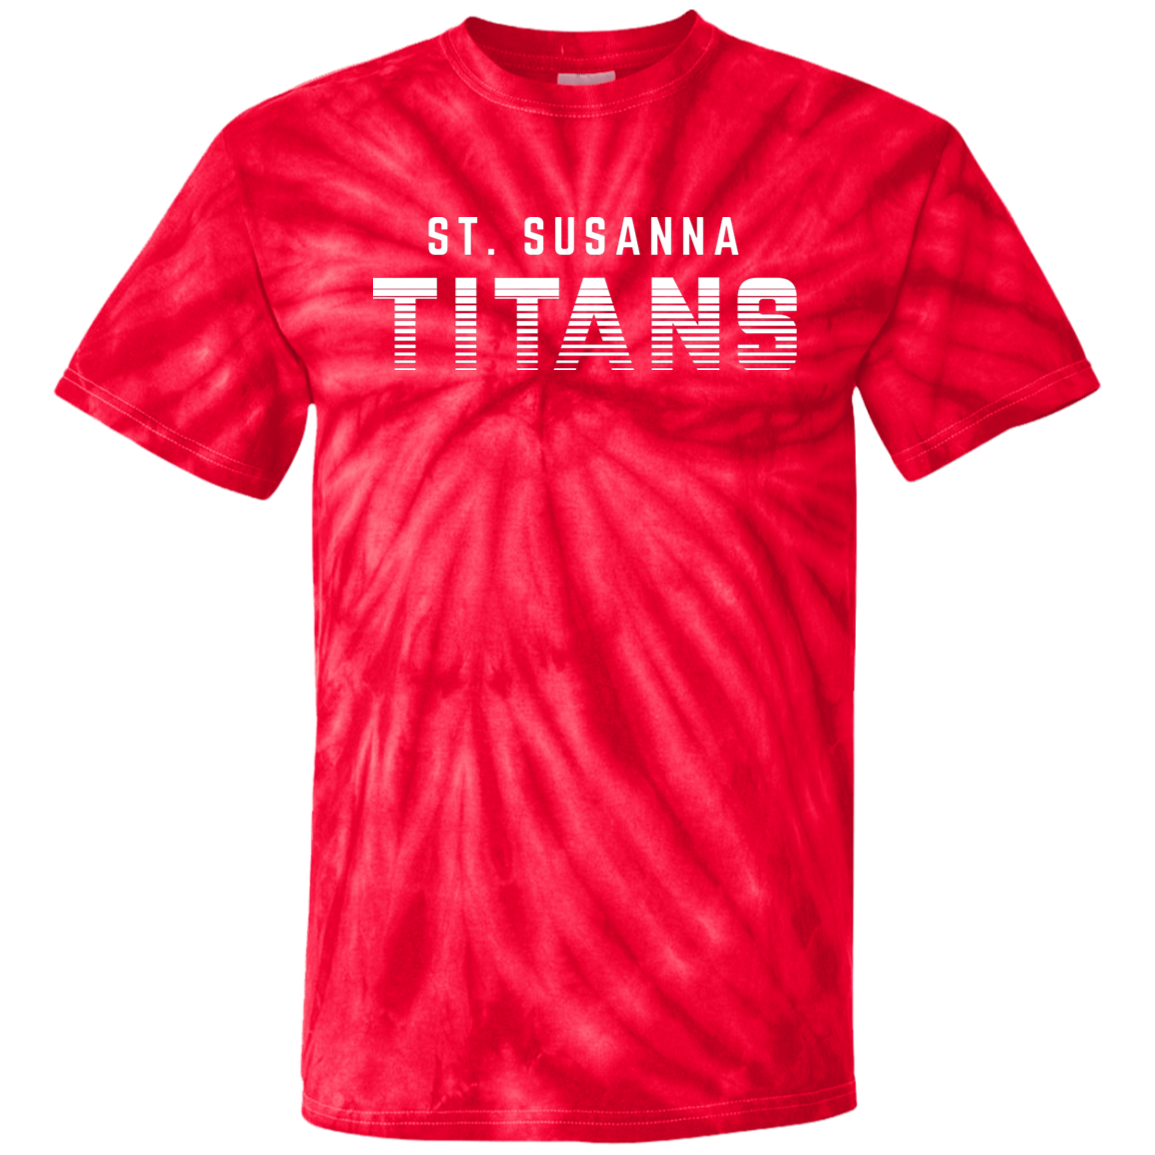 St. Susanna TITANS Youth Tie Dye T-Shirt